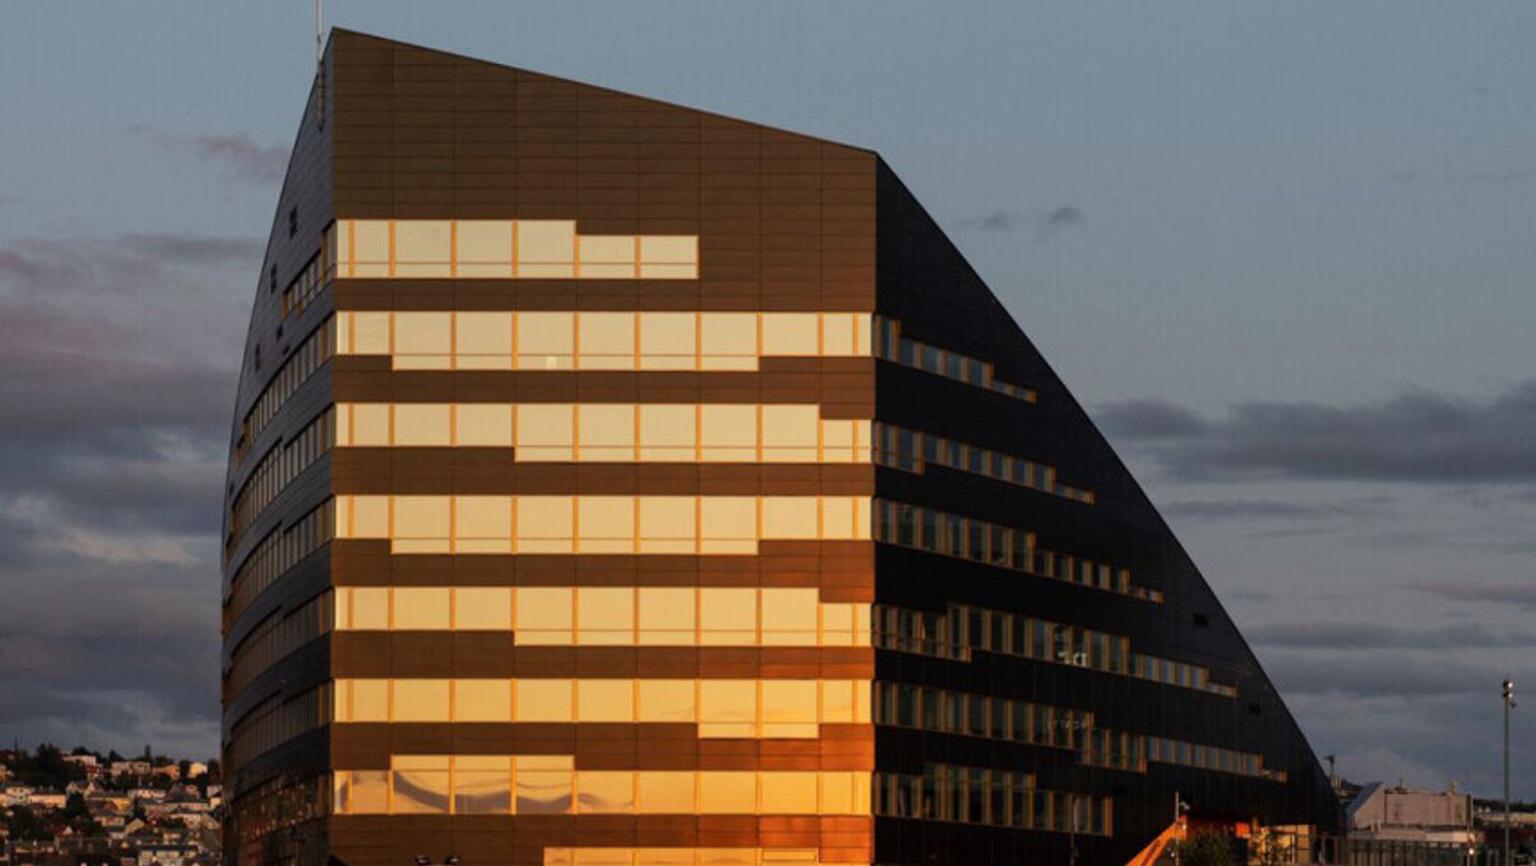 Black building with sun hitting its windows